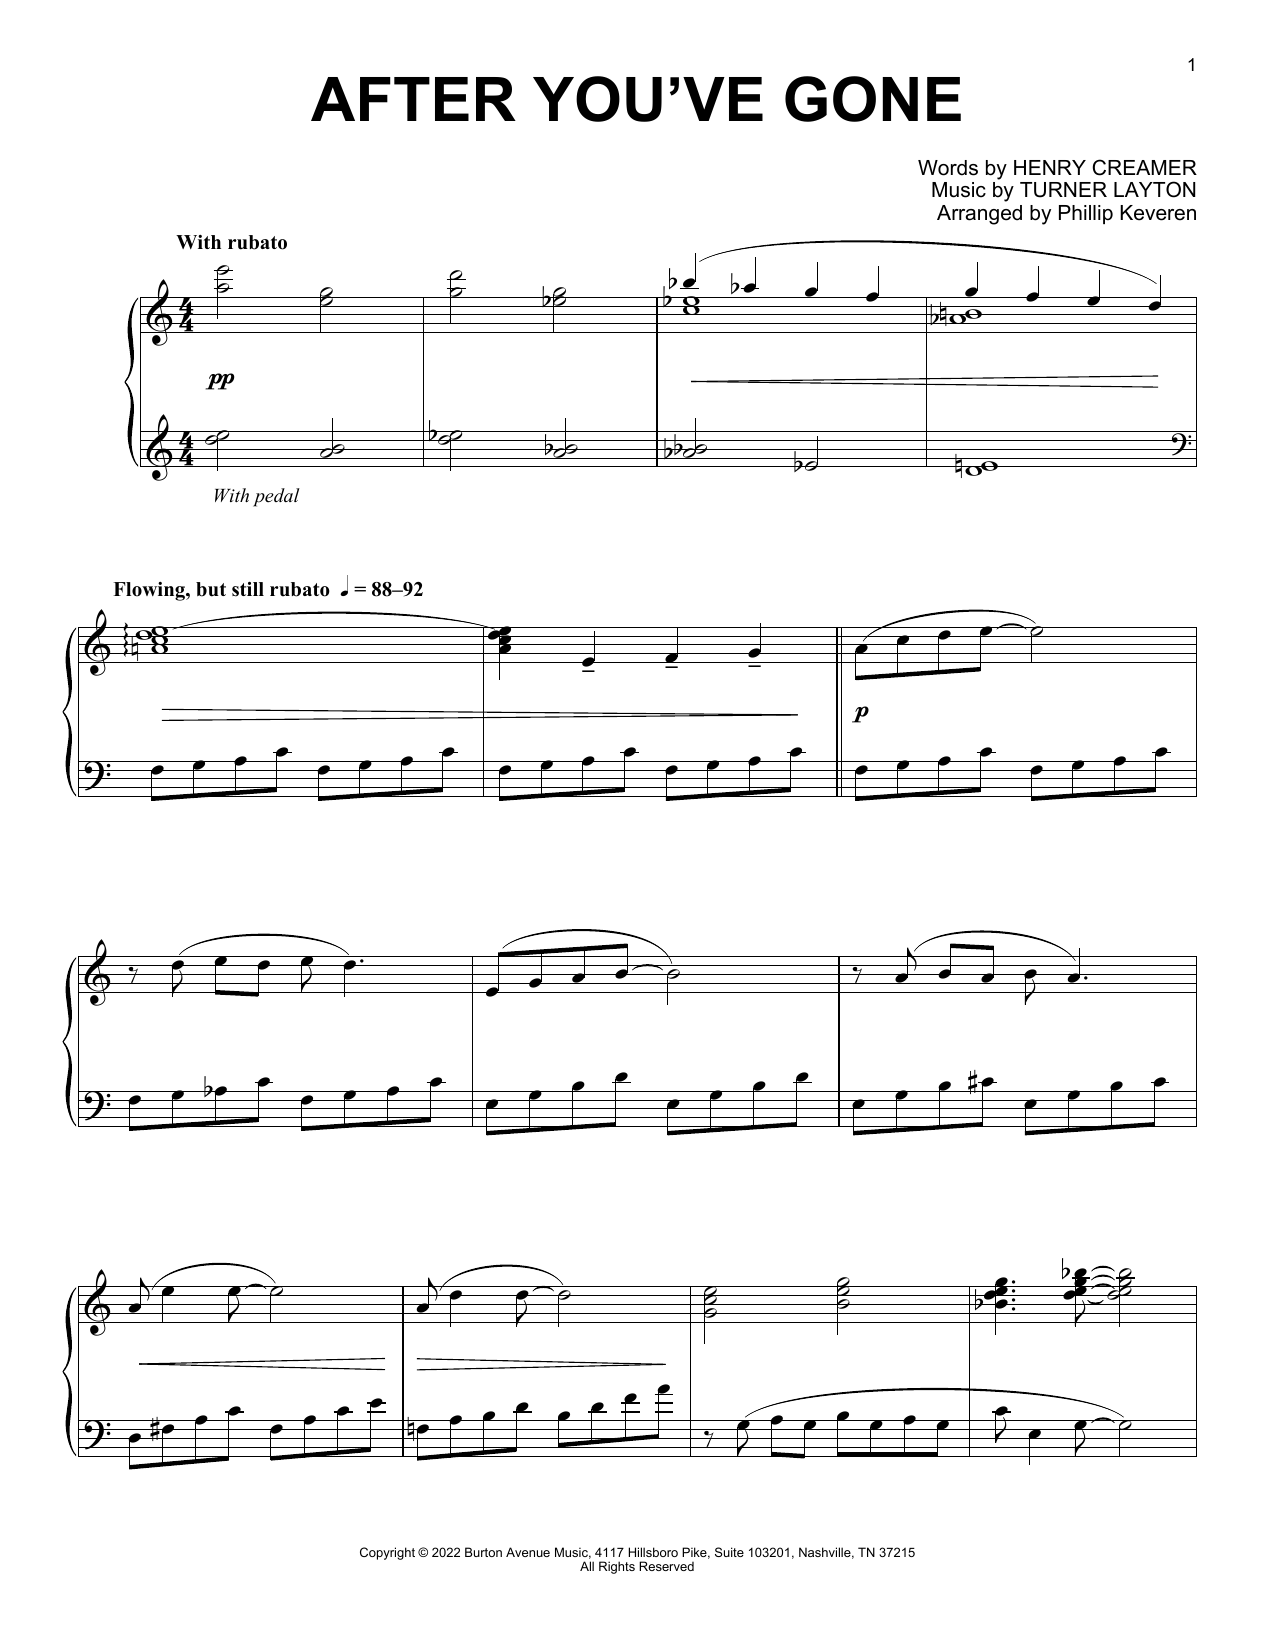 Turner Layton After You've Gone (arr. Phillip Keveren) Sheet Music Notes & Chords for Piano Solo - Download or Print PDF